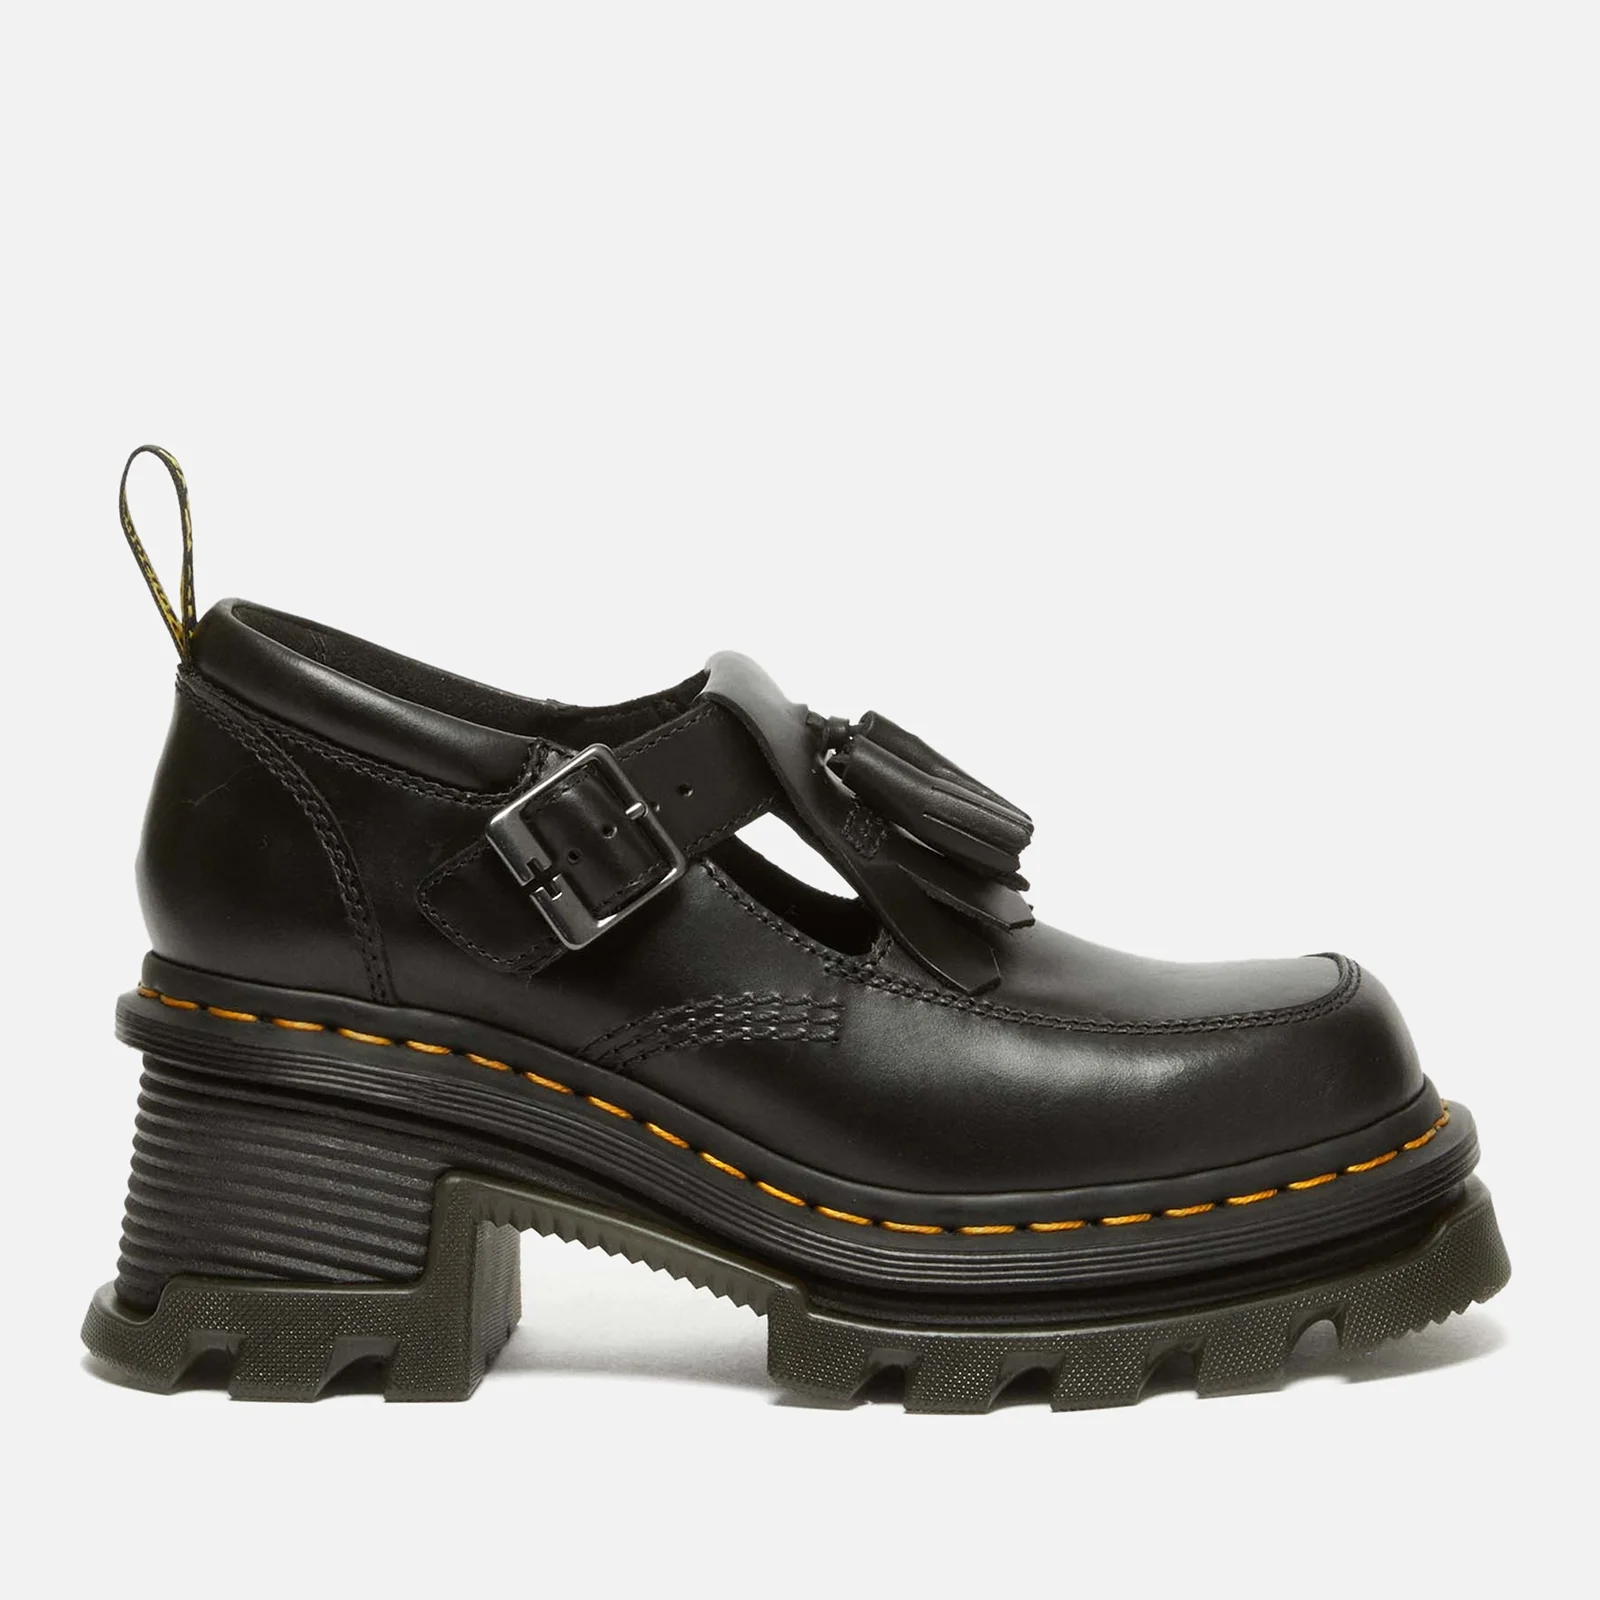 Dr. Martens Women's Corran Leather Heeled Mary-Jane Shoes - UK 3 Image 1